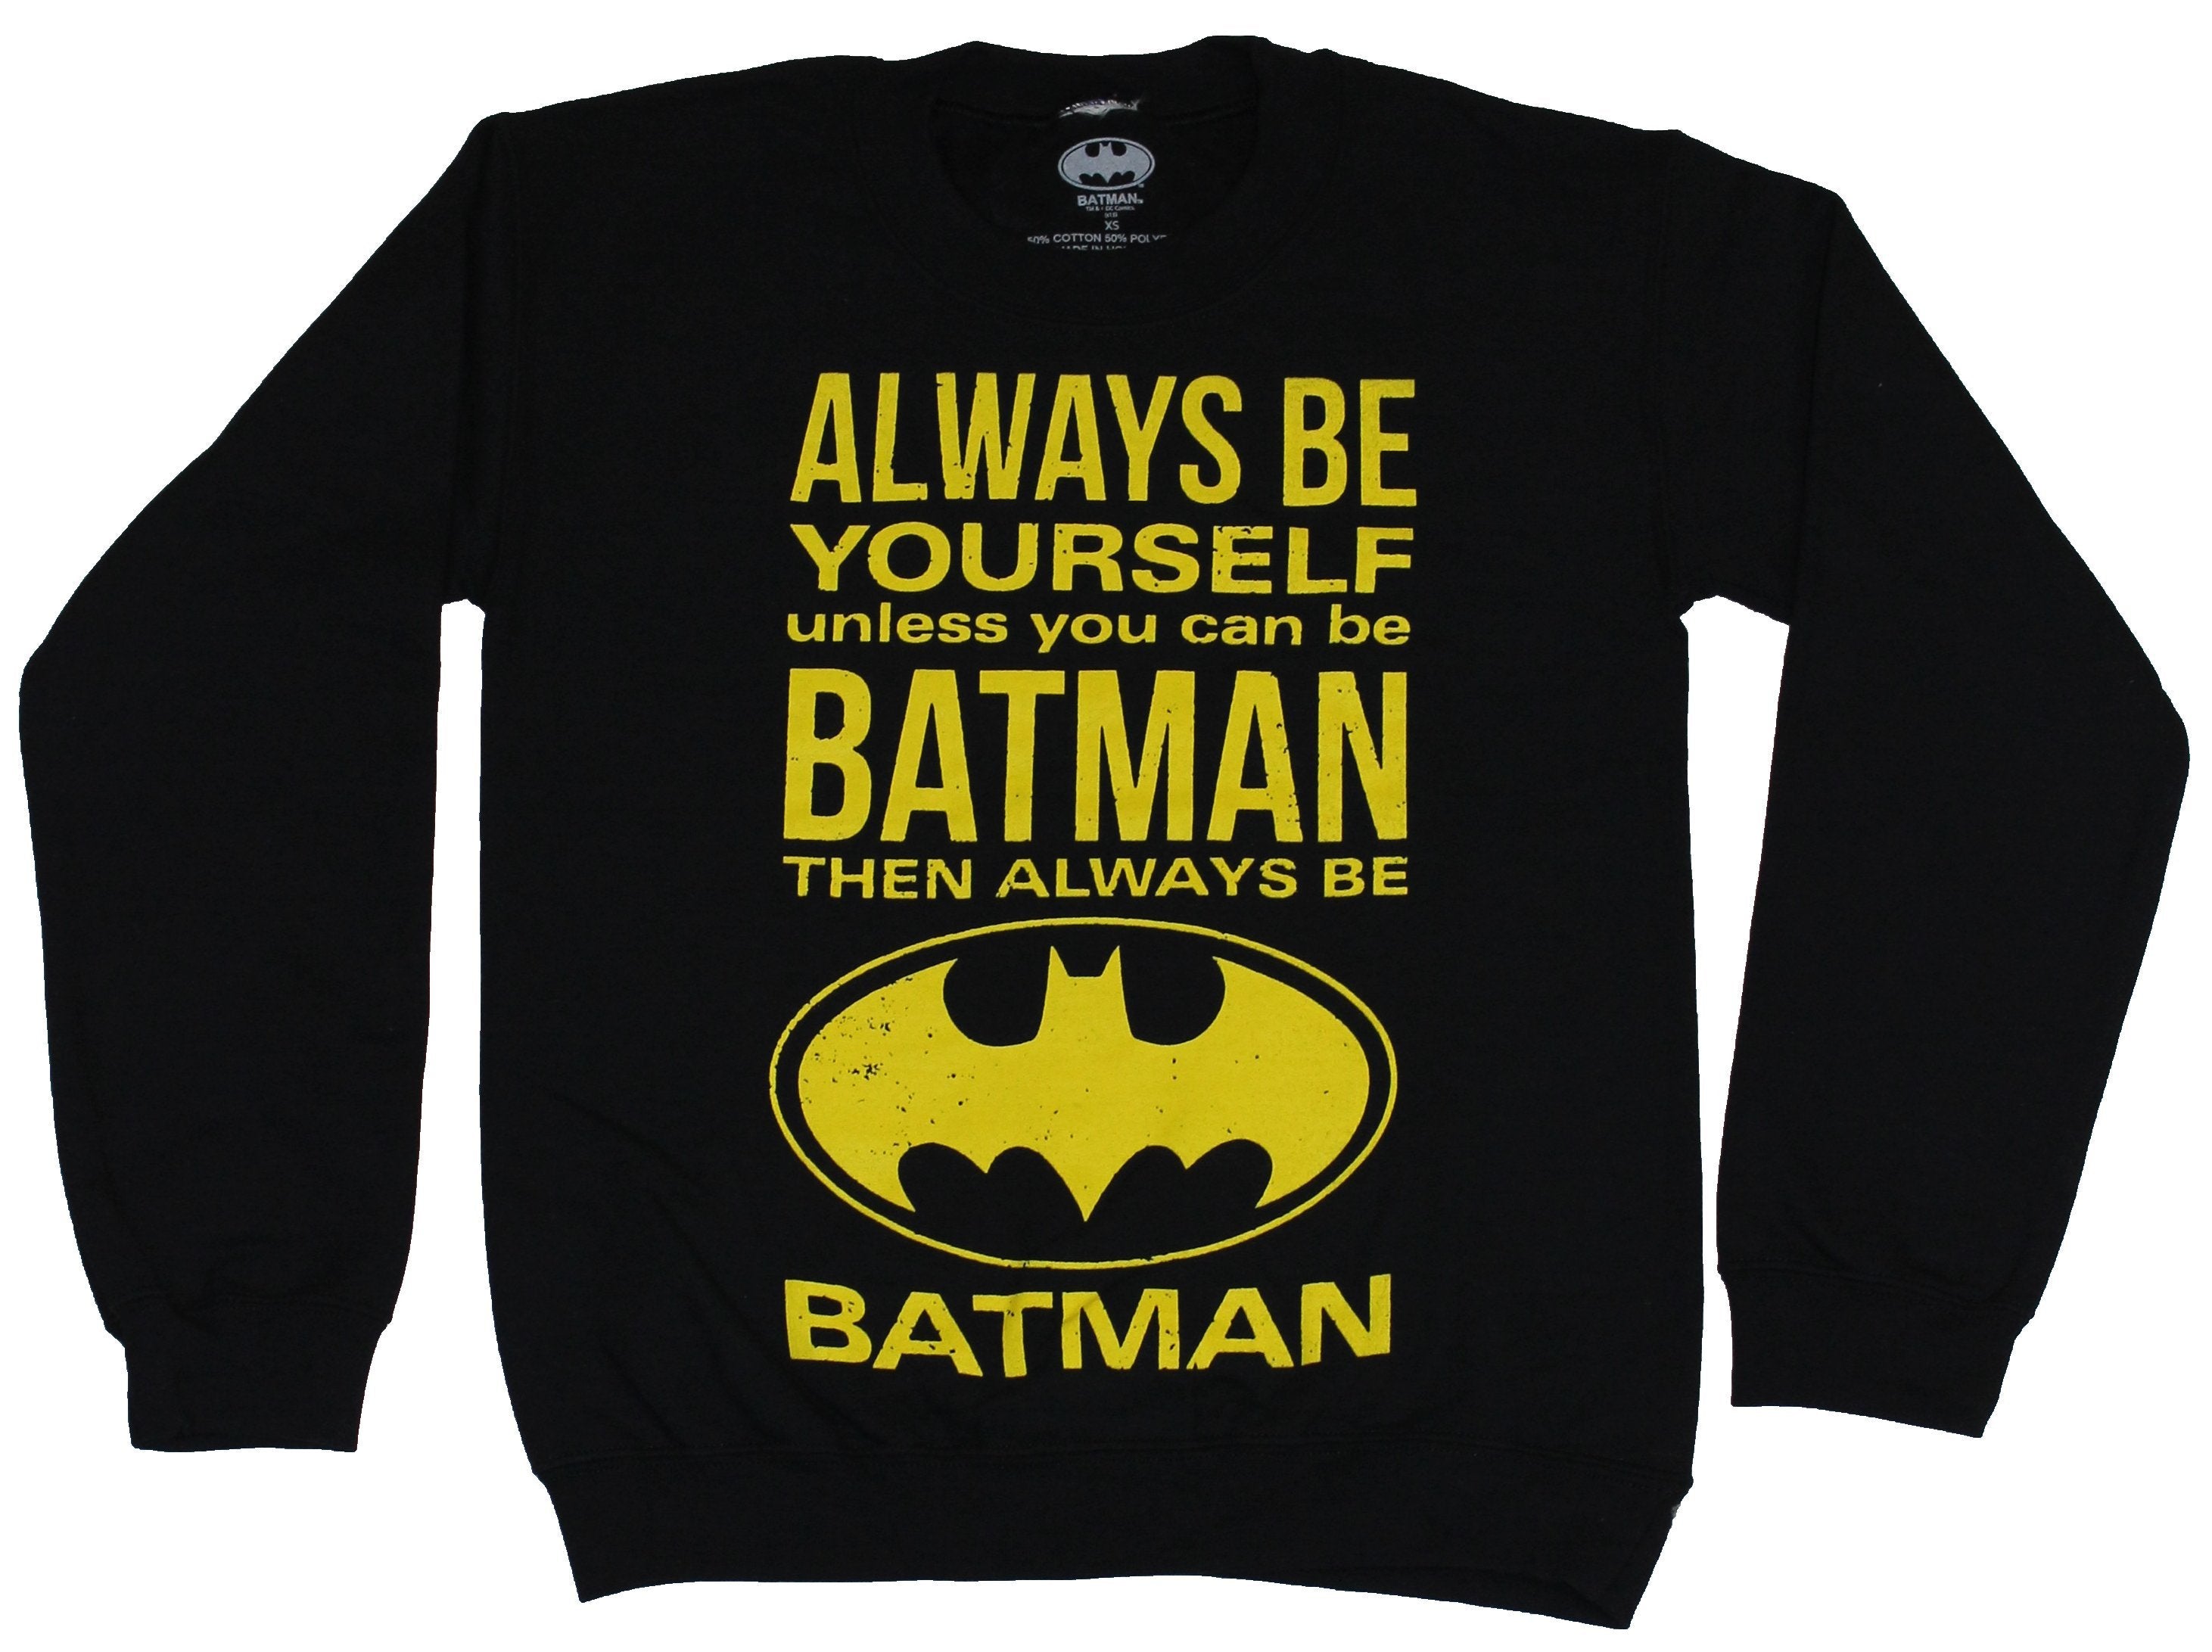 Batman (DC comics) Mens Crewneck Sweatshirt - Always Be Yourself or Be Batman